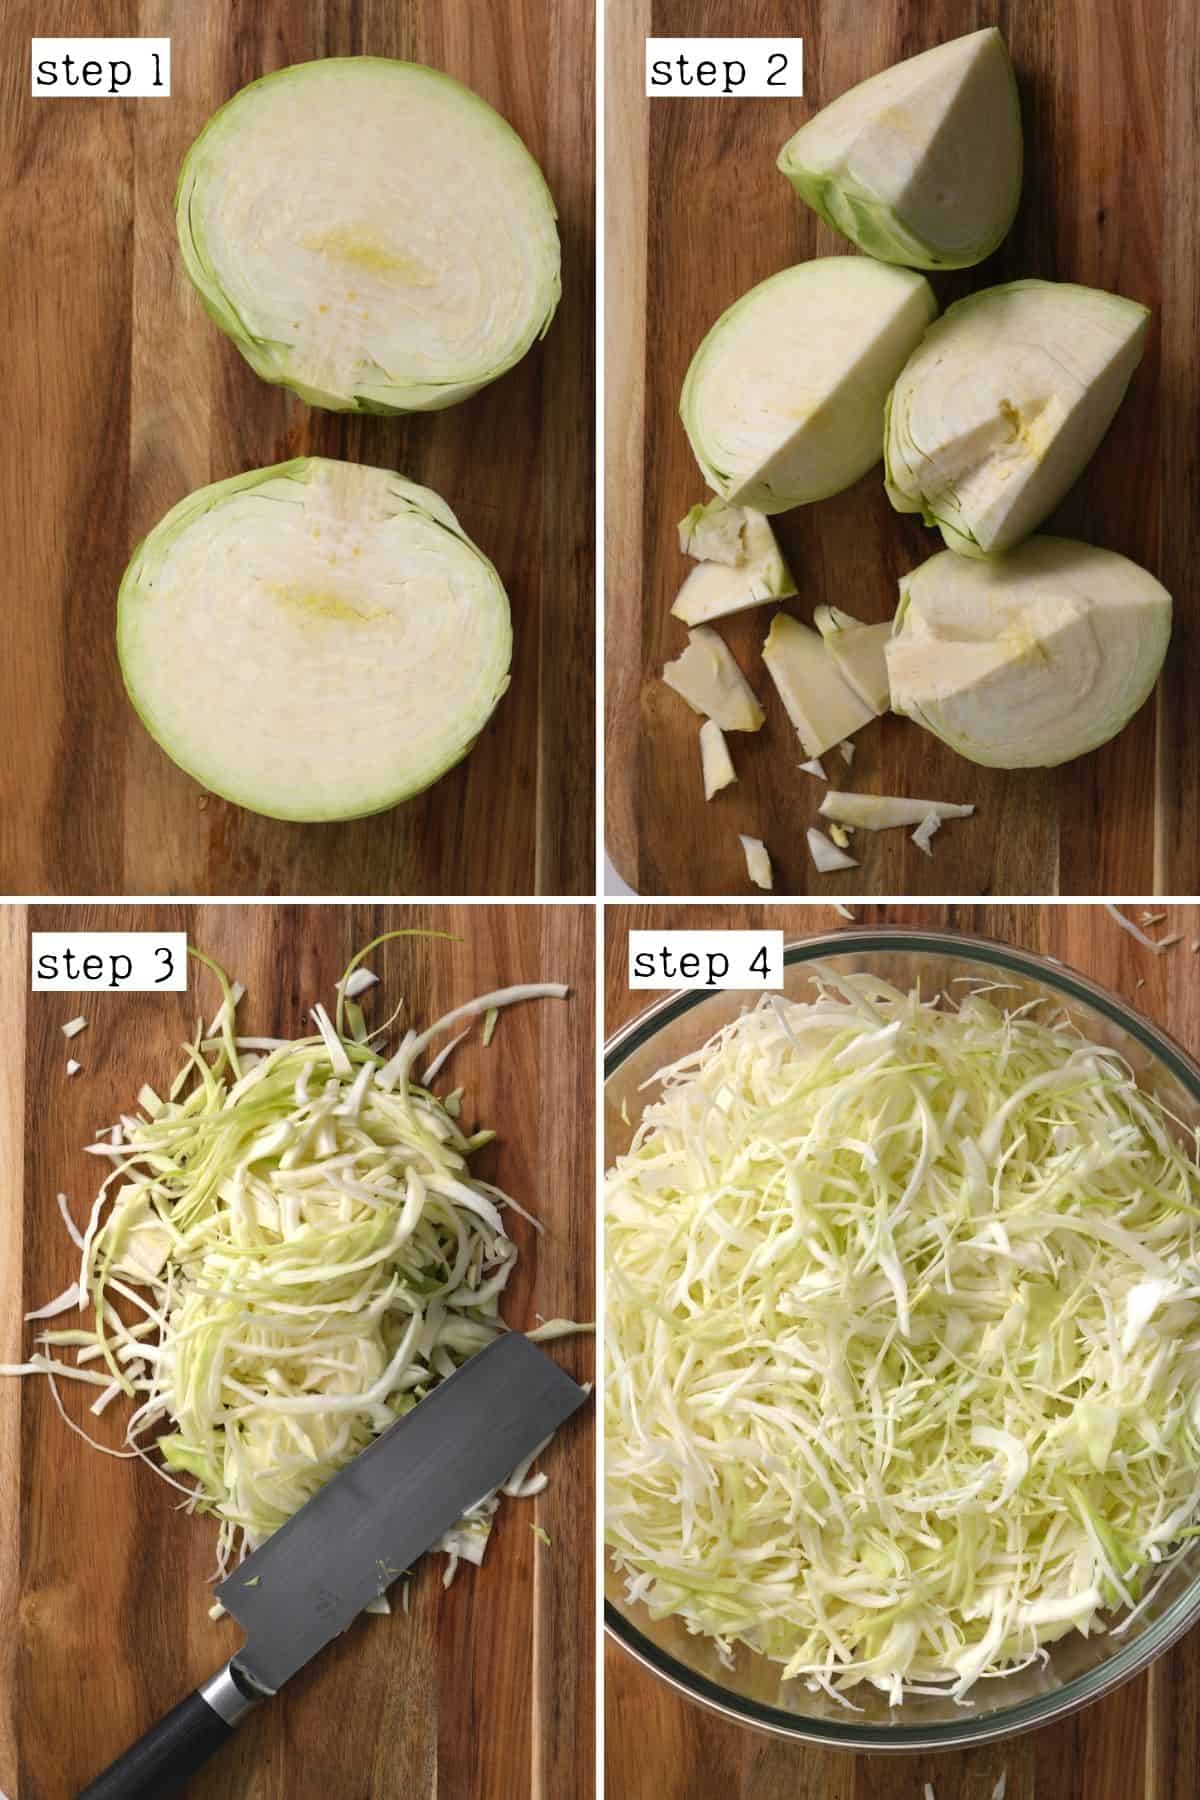 Steps for preparing cabbage for Sauerkraut